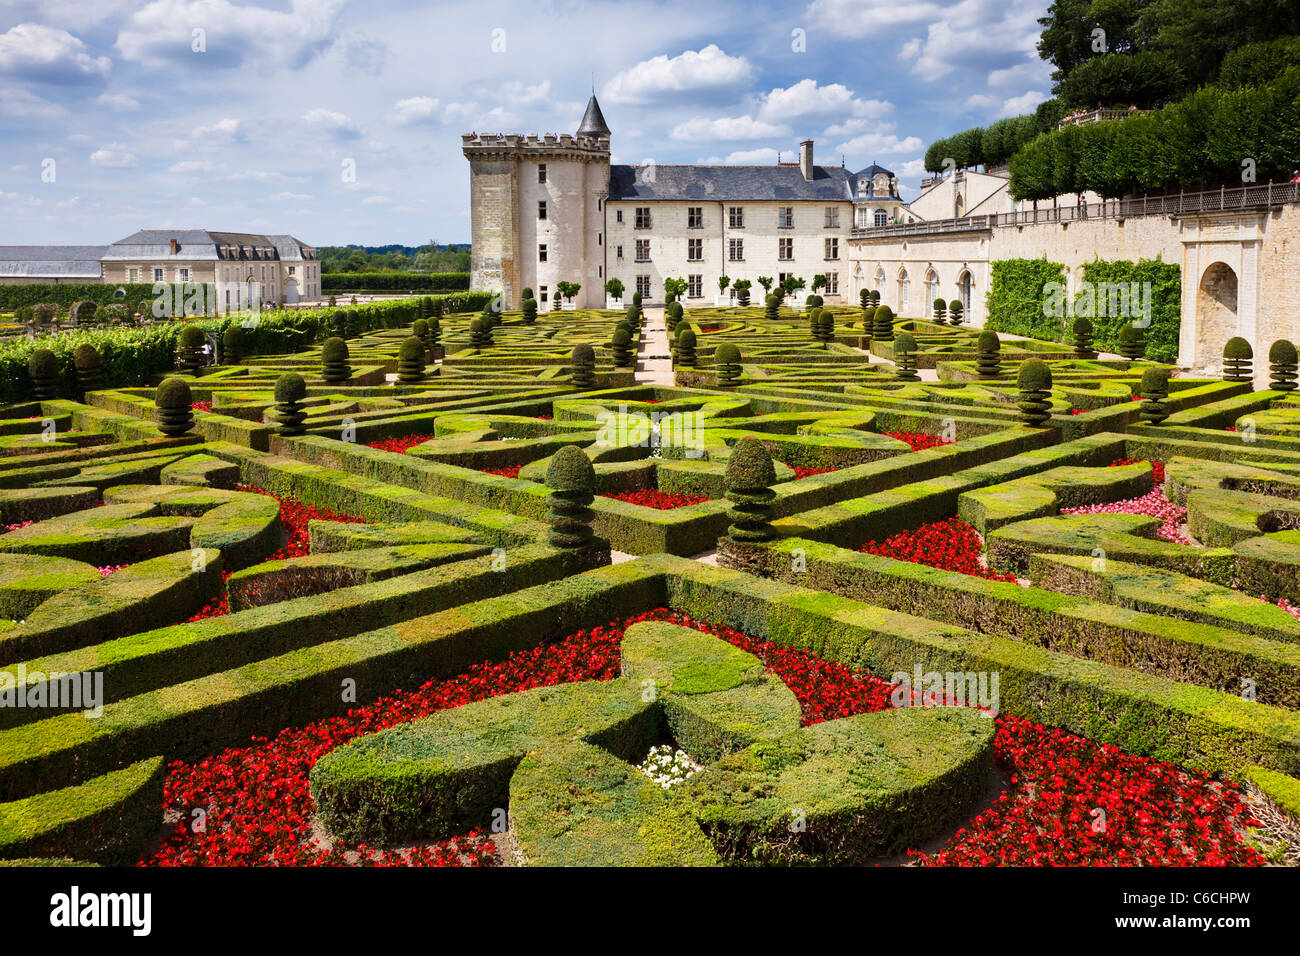 Chateau Villandry, die Liebe, Gärten, Tal der Loire, Indre-et-Loire, Frankreich, Europa Stockfoto